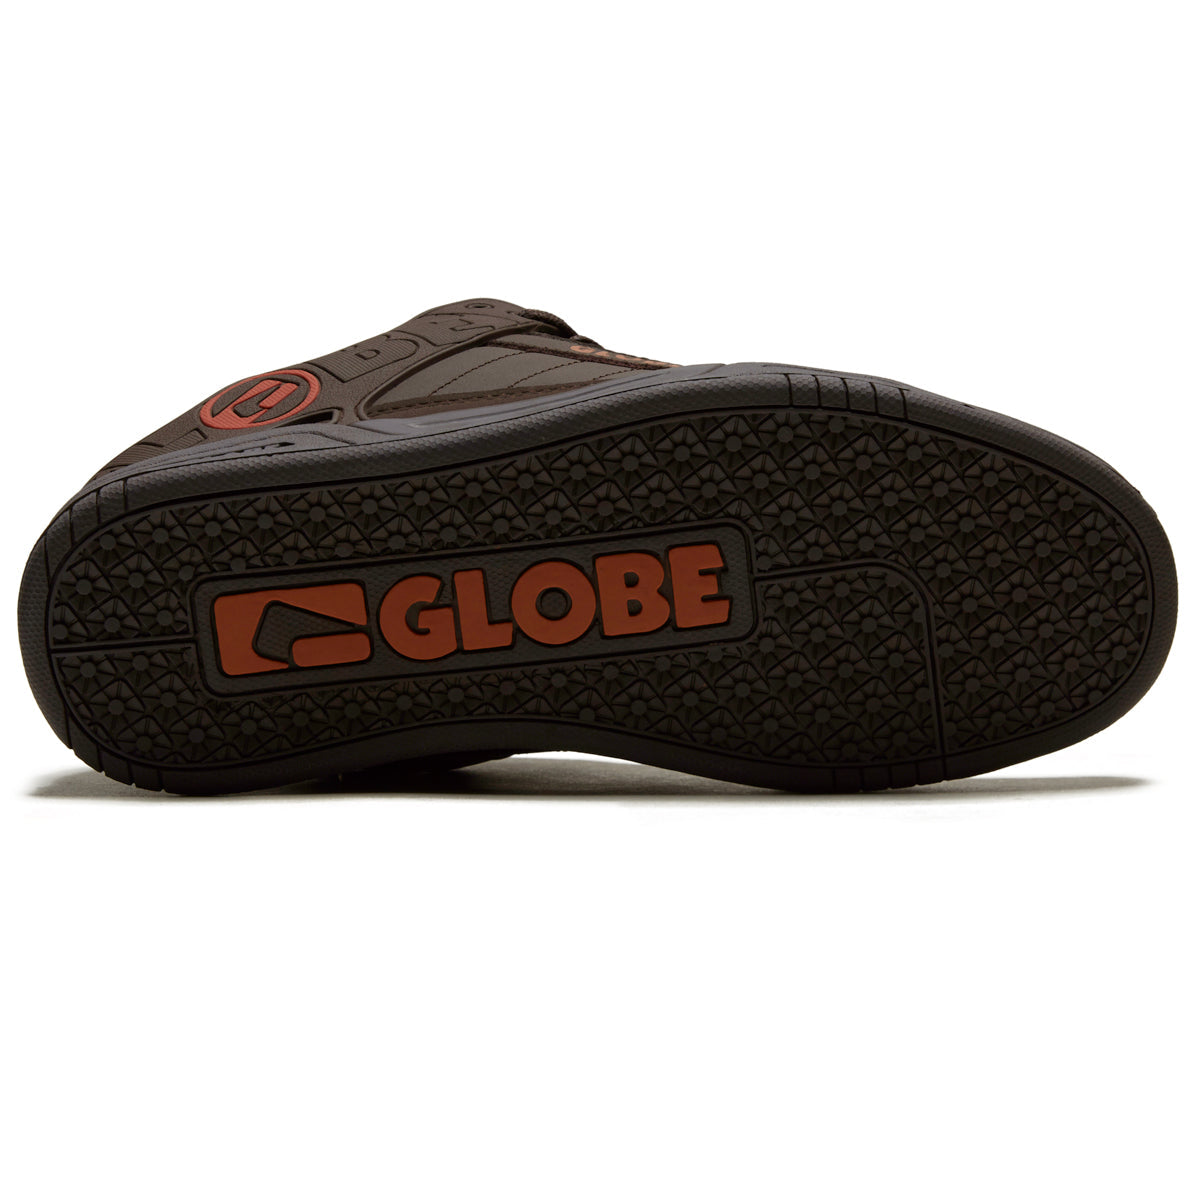 Globe Tilt Shoes - Dark Oak/Bronze image 4